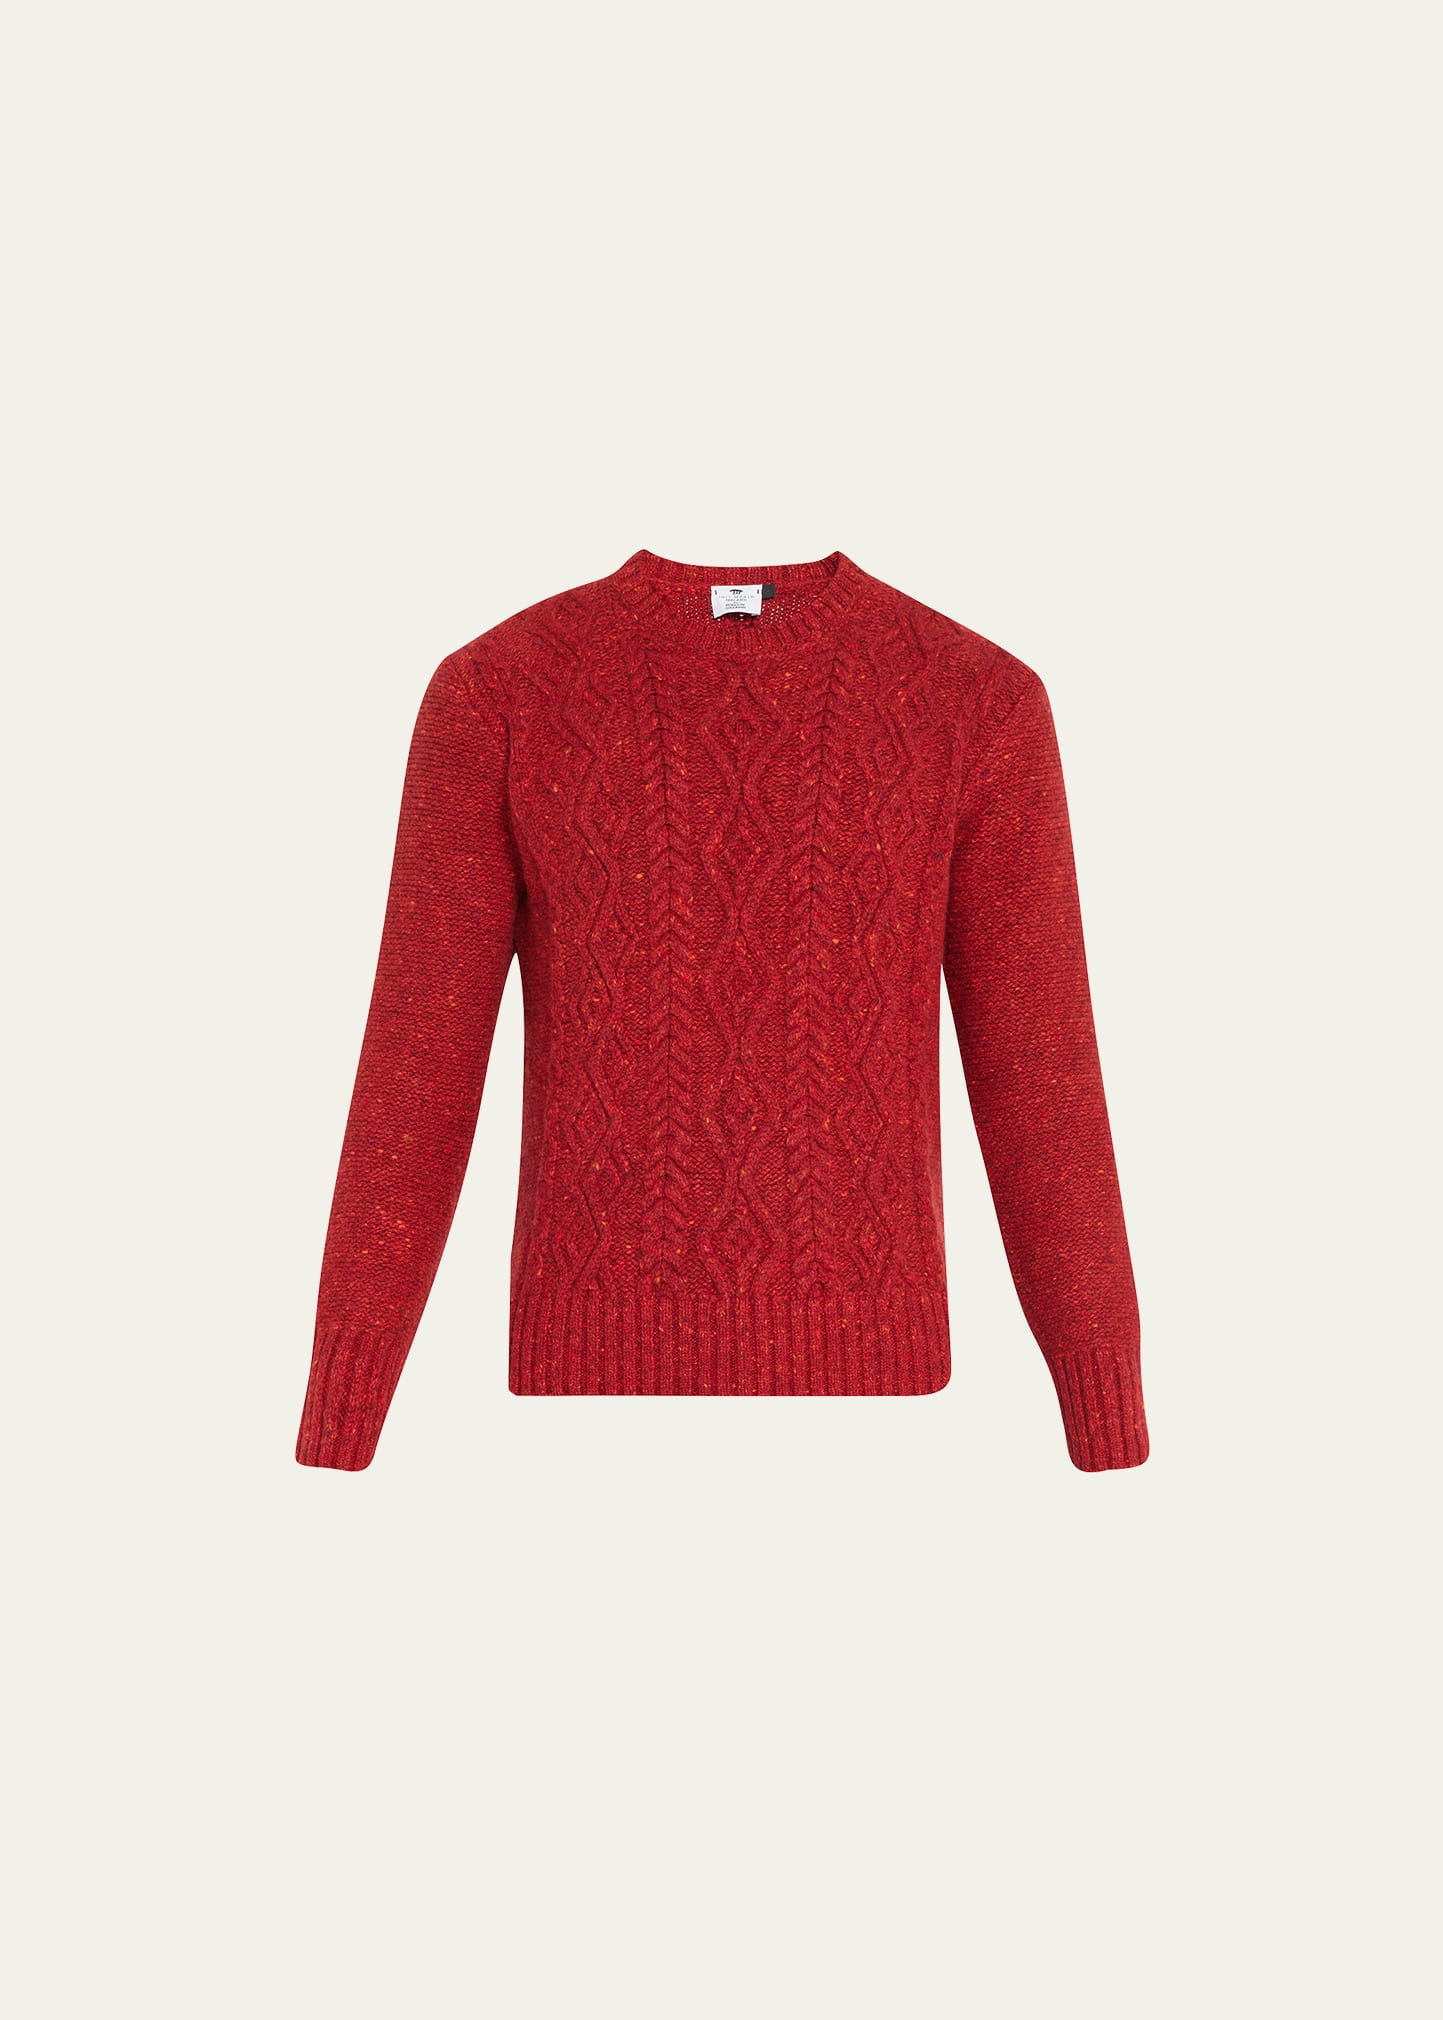 Inis Meain Men's Aran Cable-Knit Crewneck Sweater